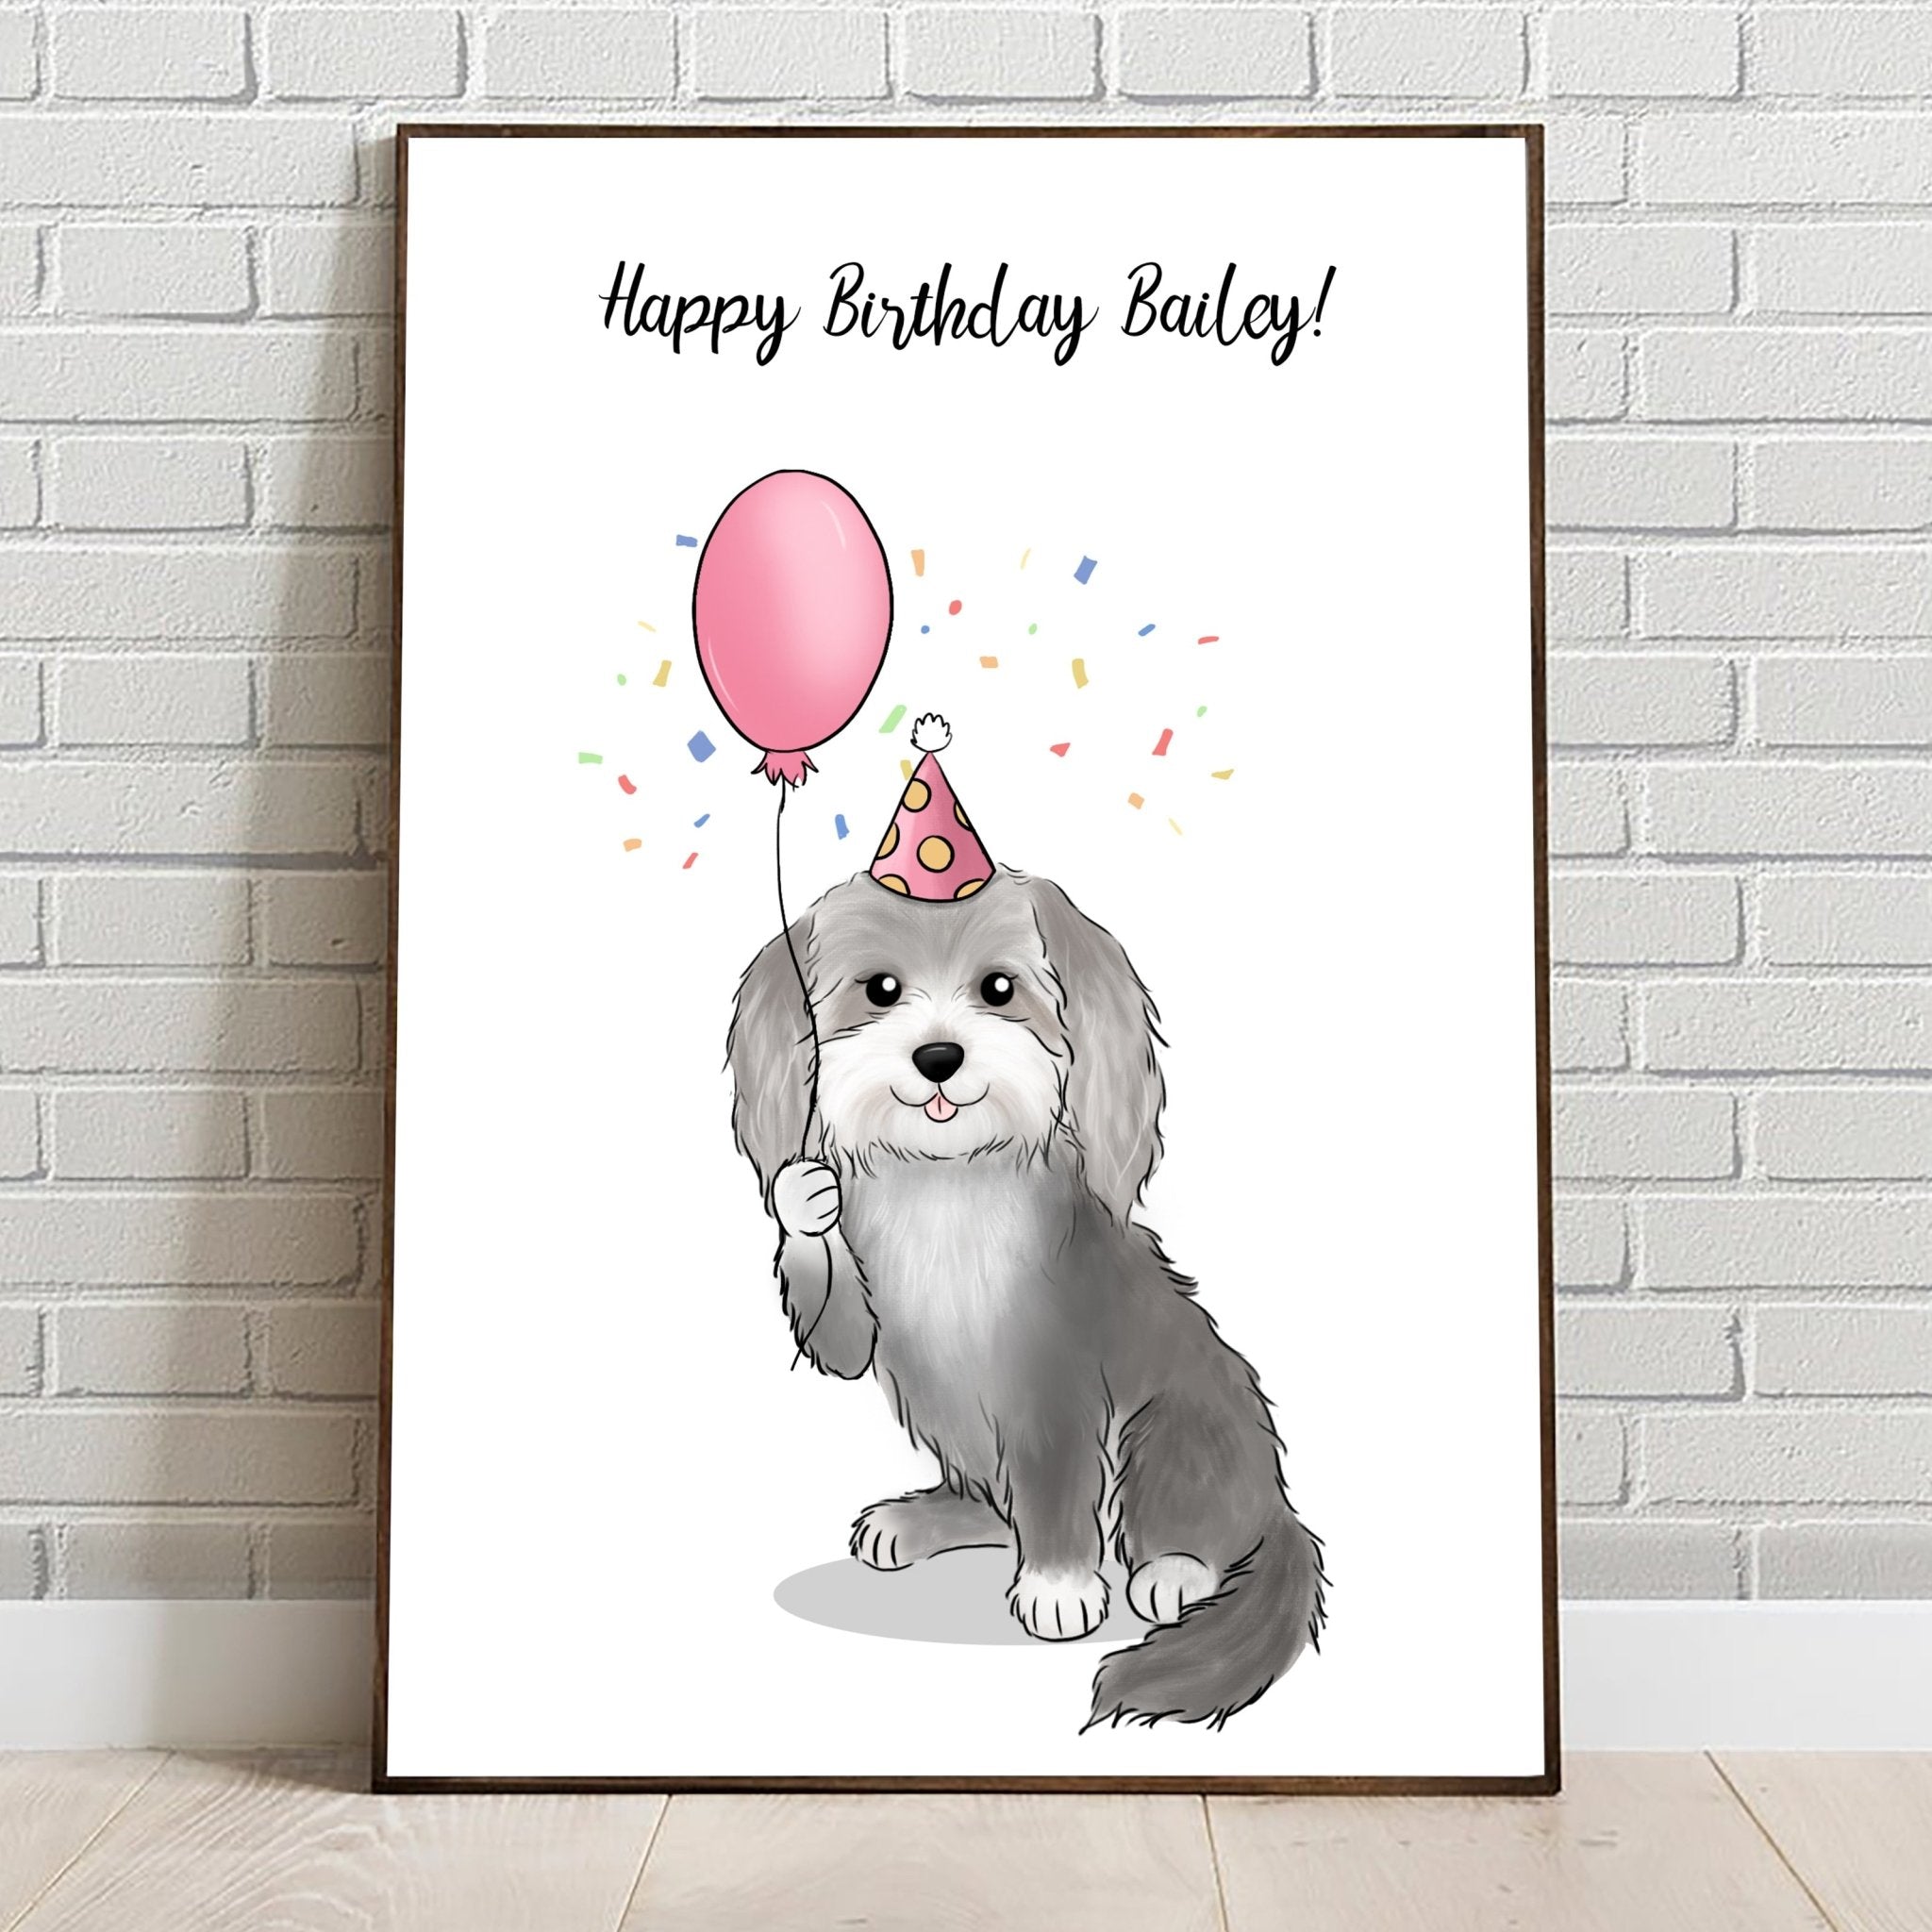 Custom Personalised Greeting Card / Birthday, Anniversay Card with Pet Portrait - Adventures of Rubi